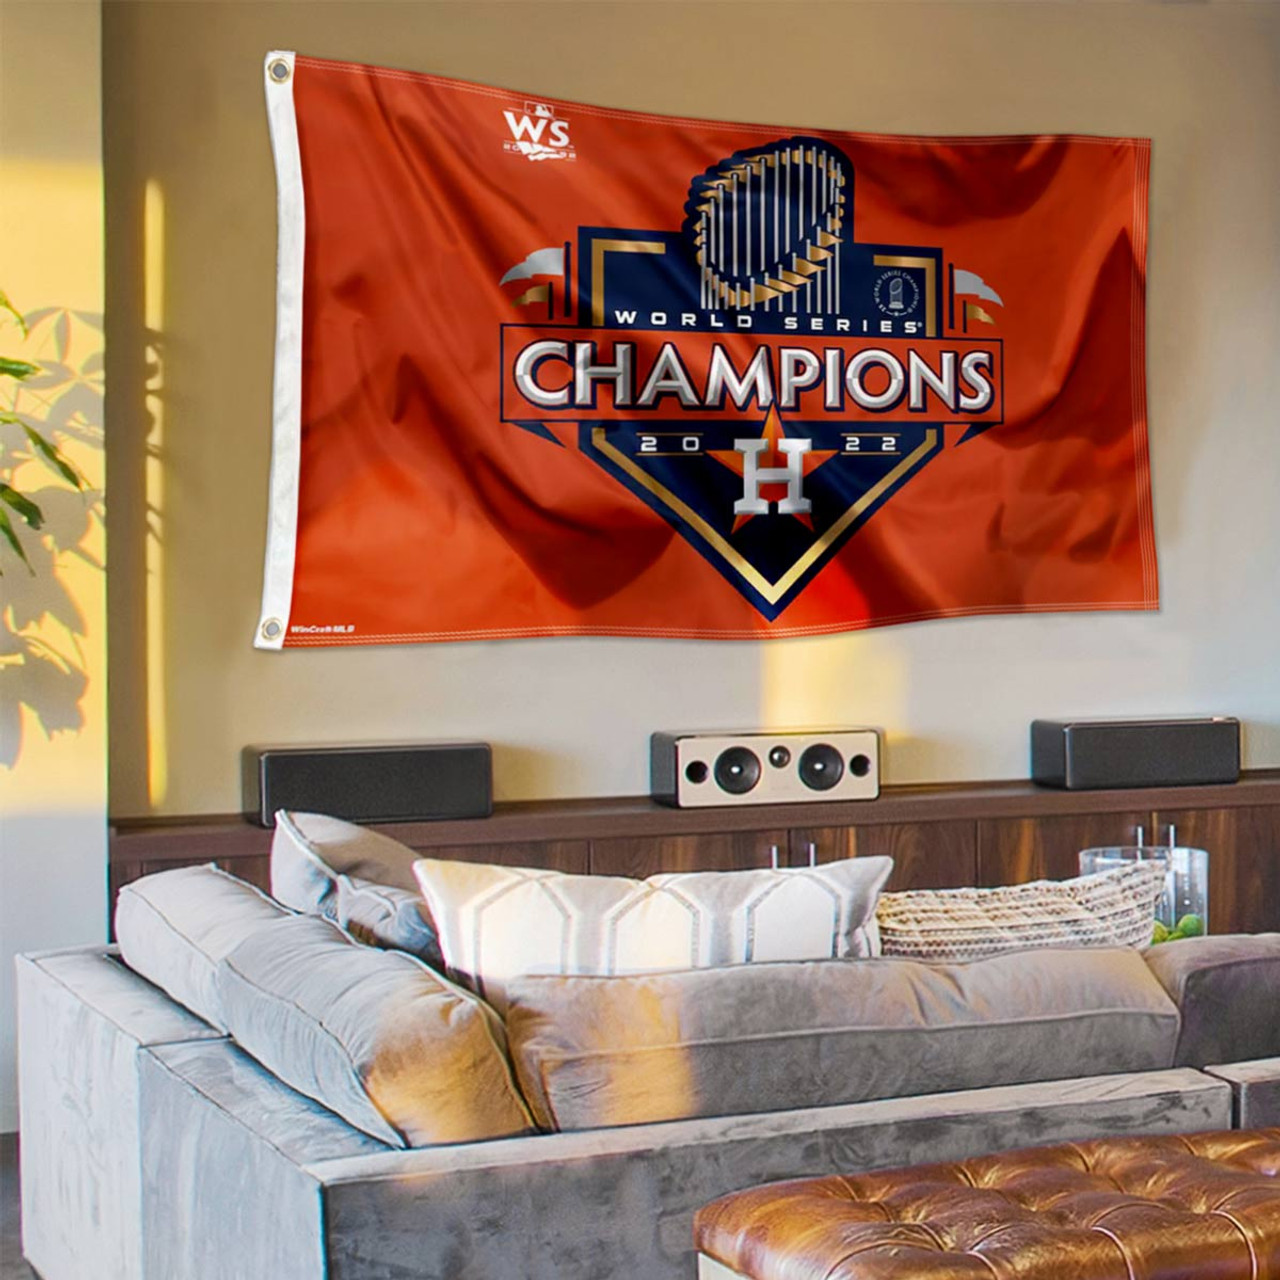 Houston Astros Banner 2022 World Series Champions Flag